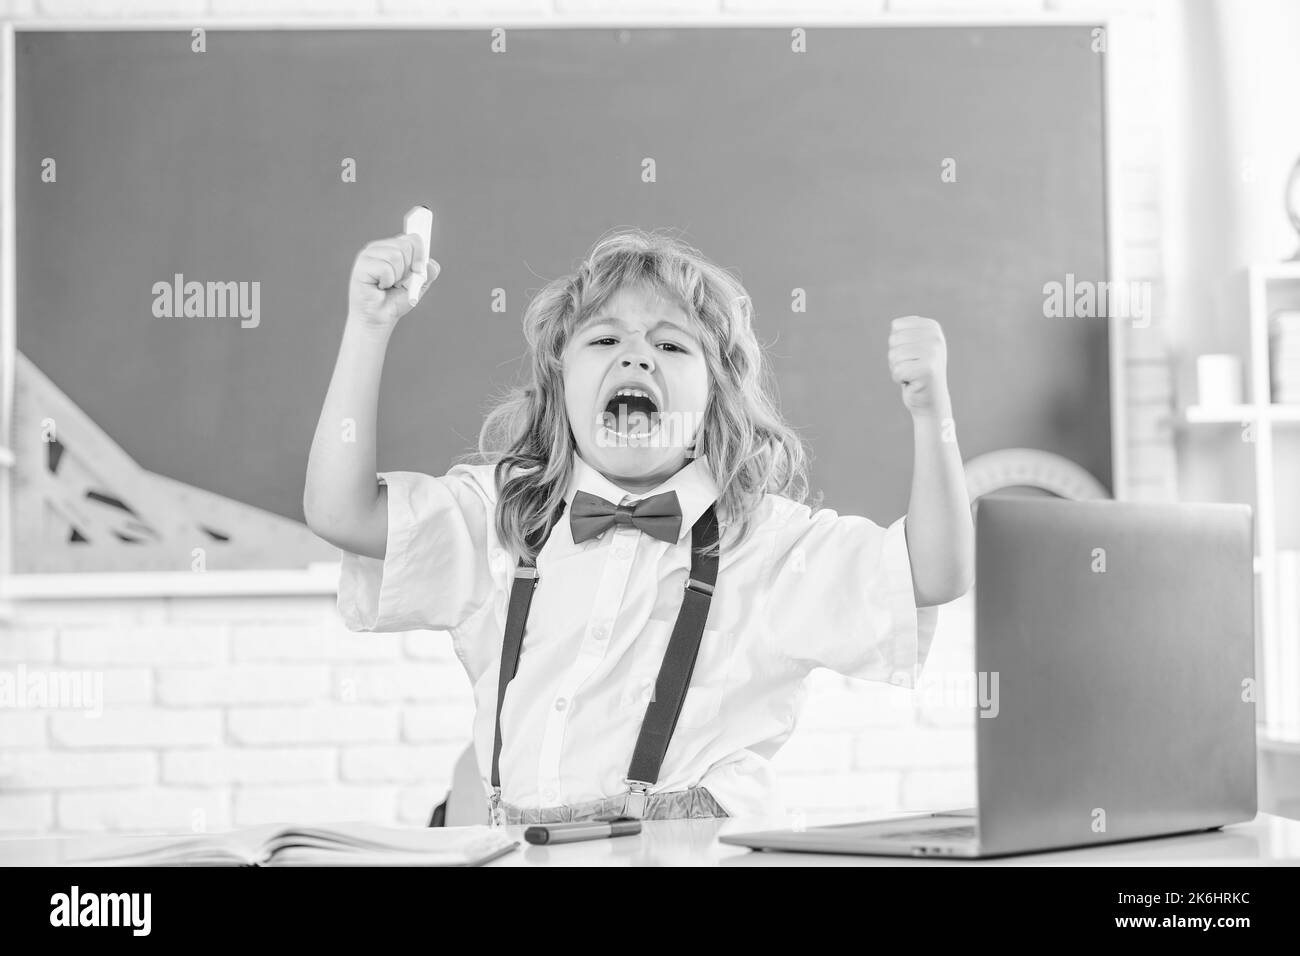 shouting kid boy in bow tie study in school classrrom at blackboard, emotions Stock Photo